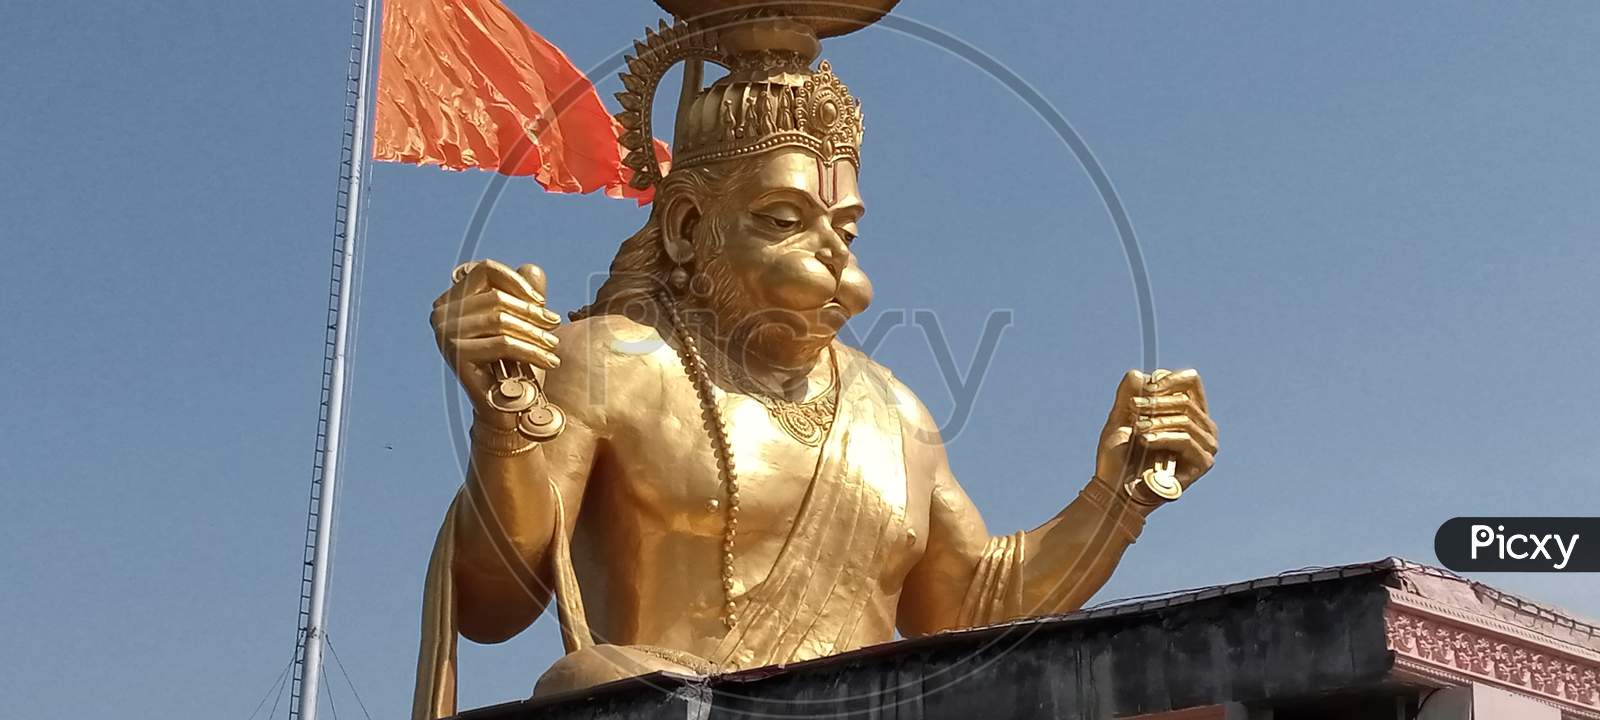 Pitreshwar Hanuman idol